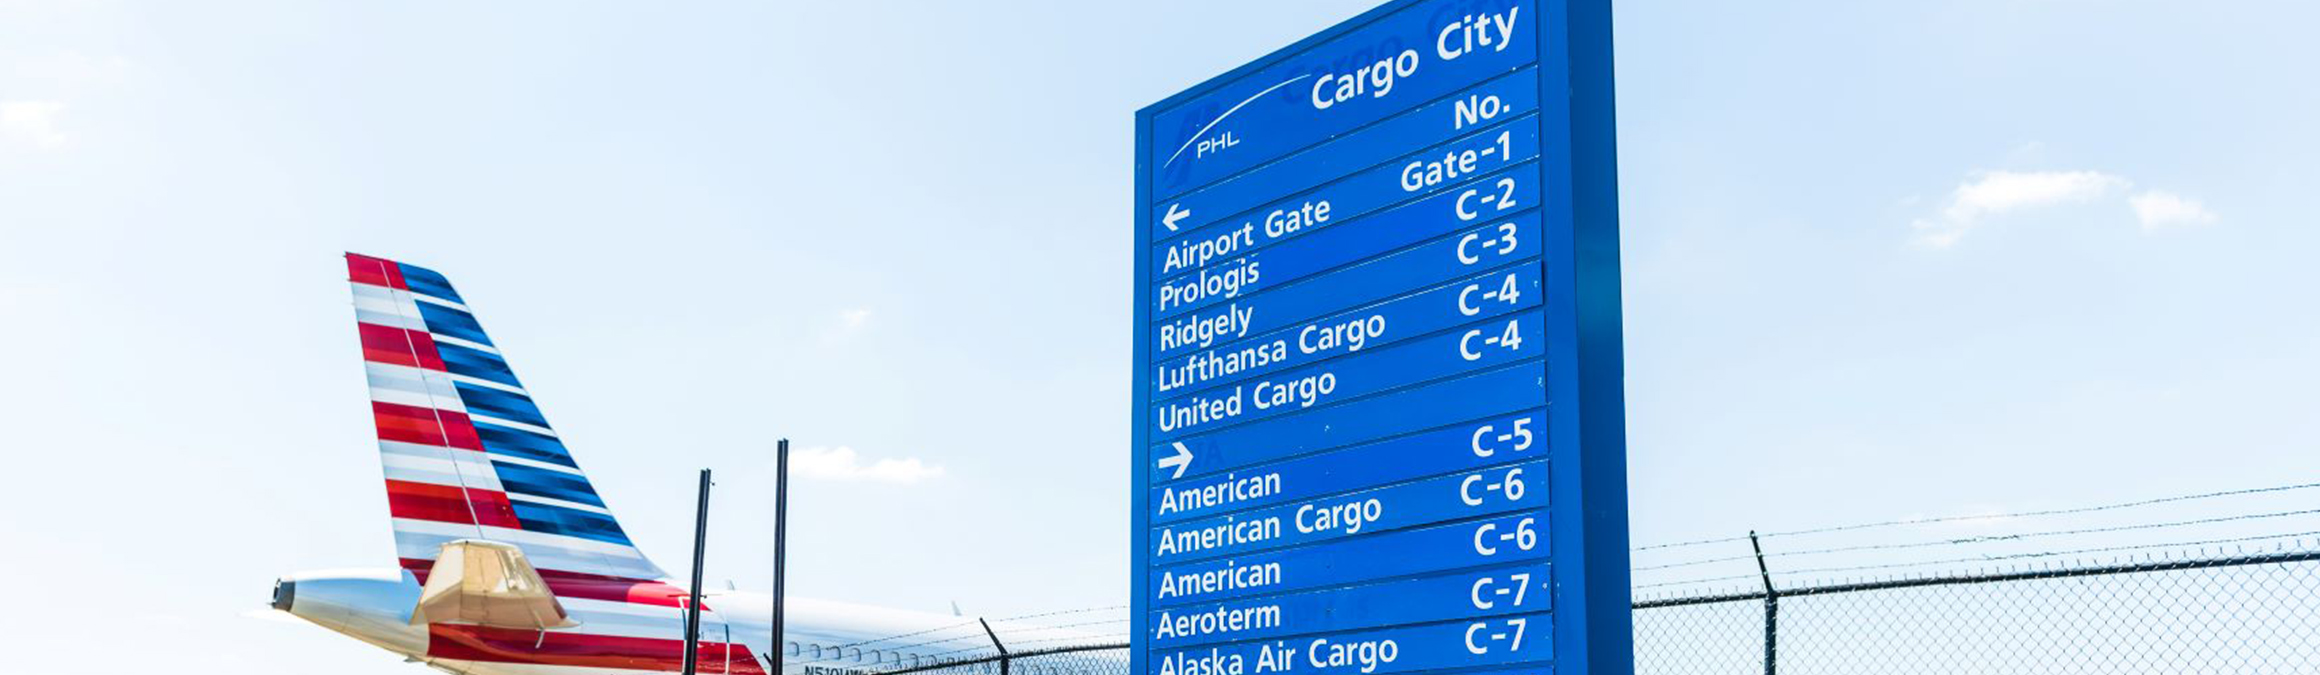 Cargo City sign